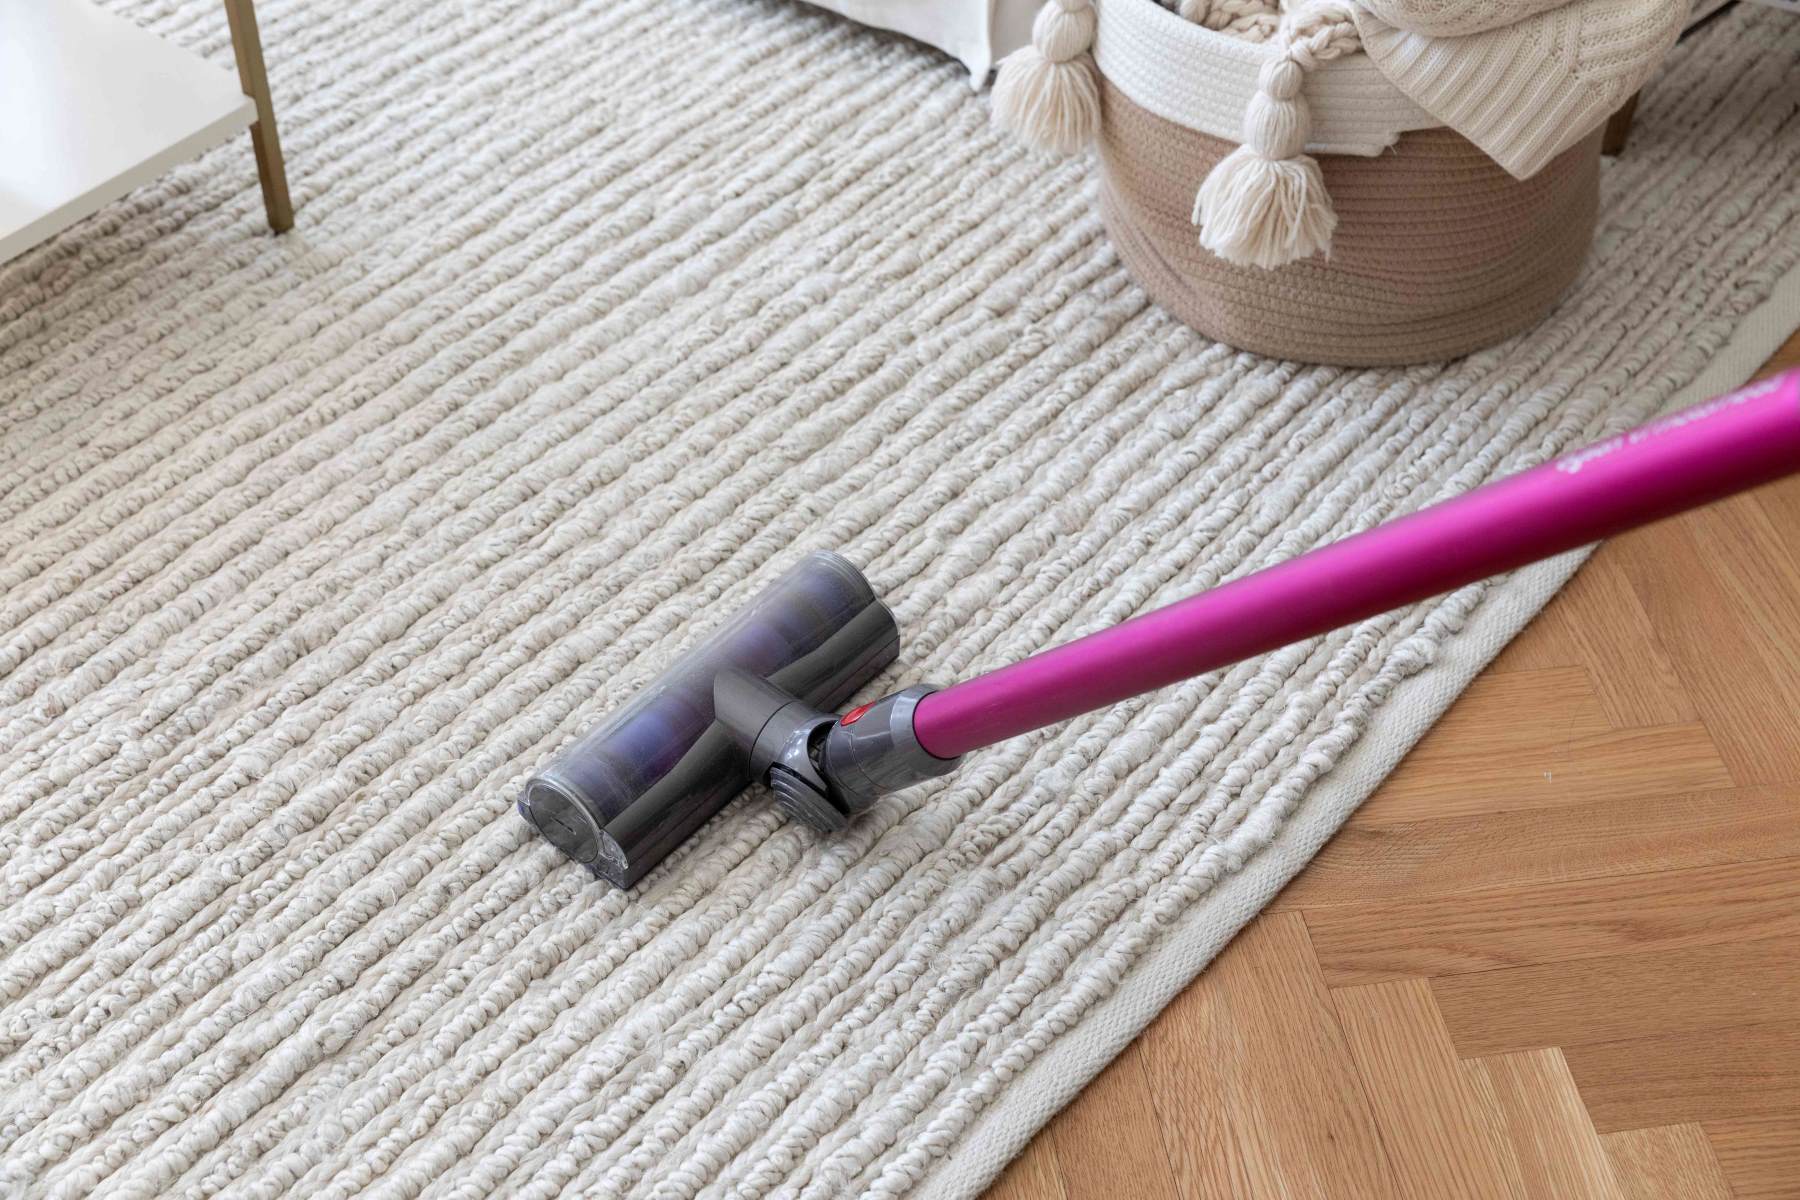 How Often Should Carpet Be Vacuumed